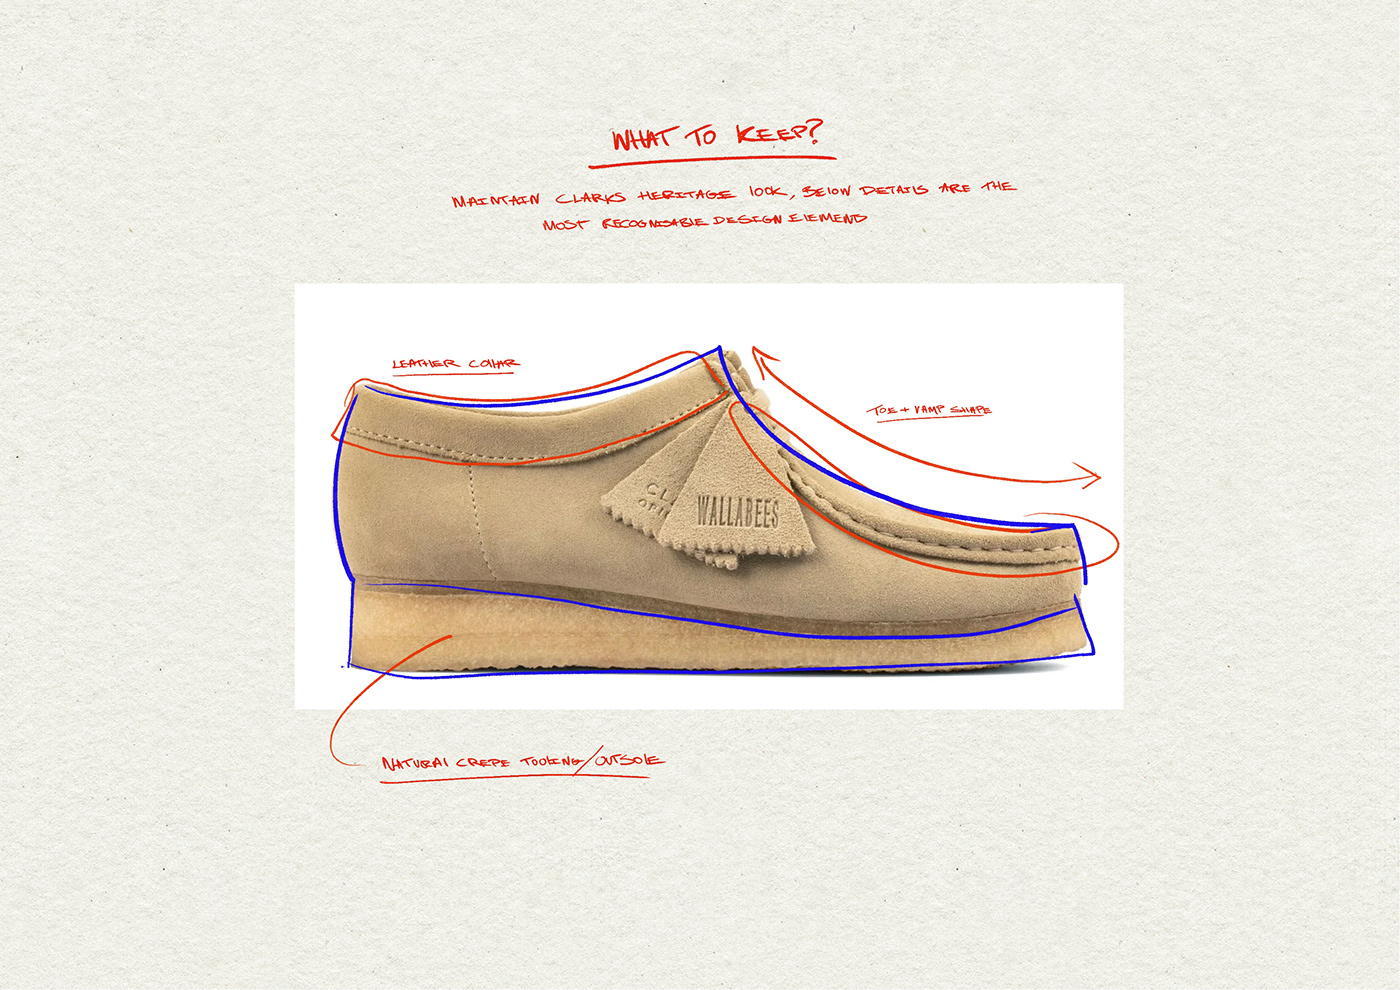 footwear design sneakers Clarks milton lennox cato blender Fashion  industrial design  STUDIO DSRPT REMIX WALLABEE REMIX